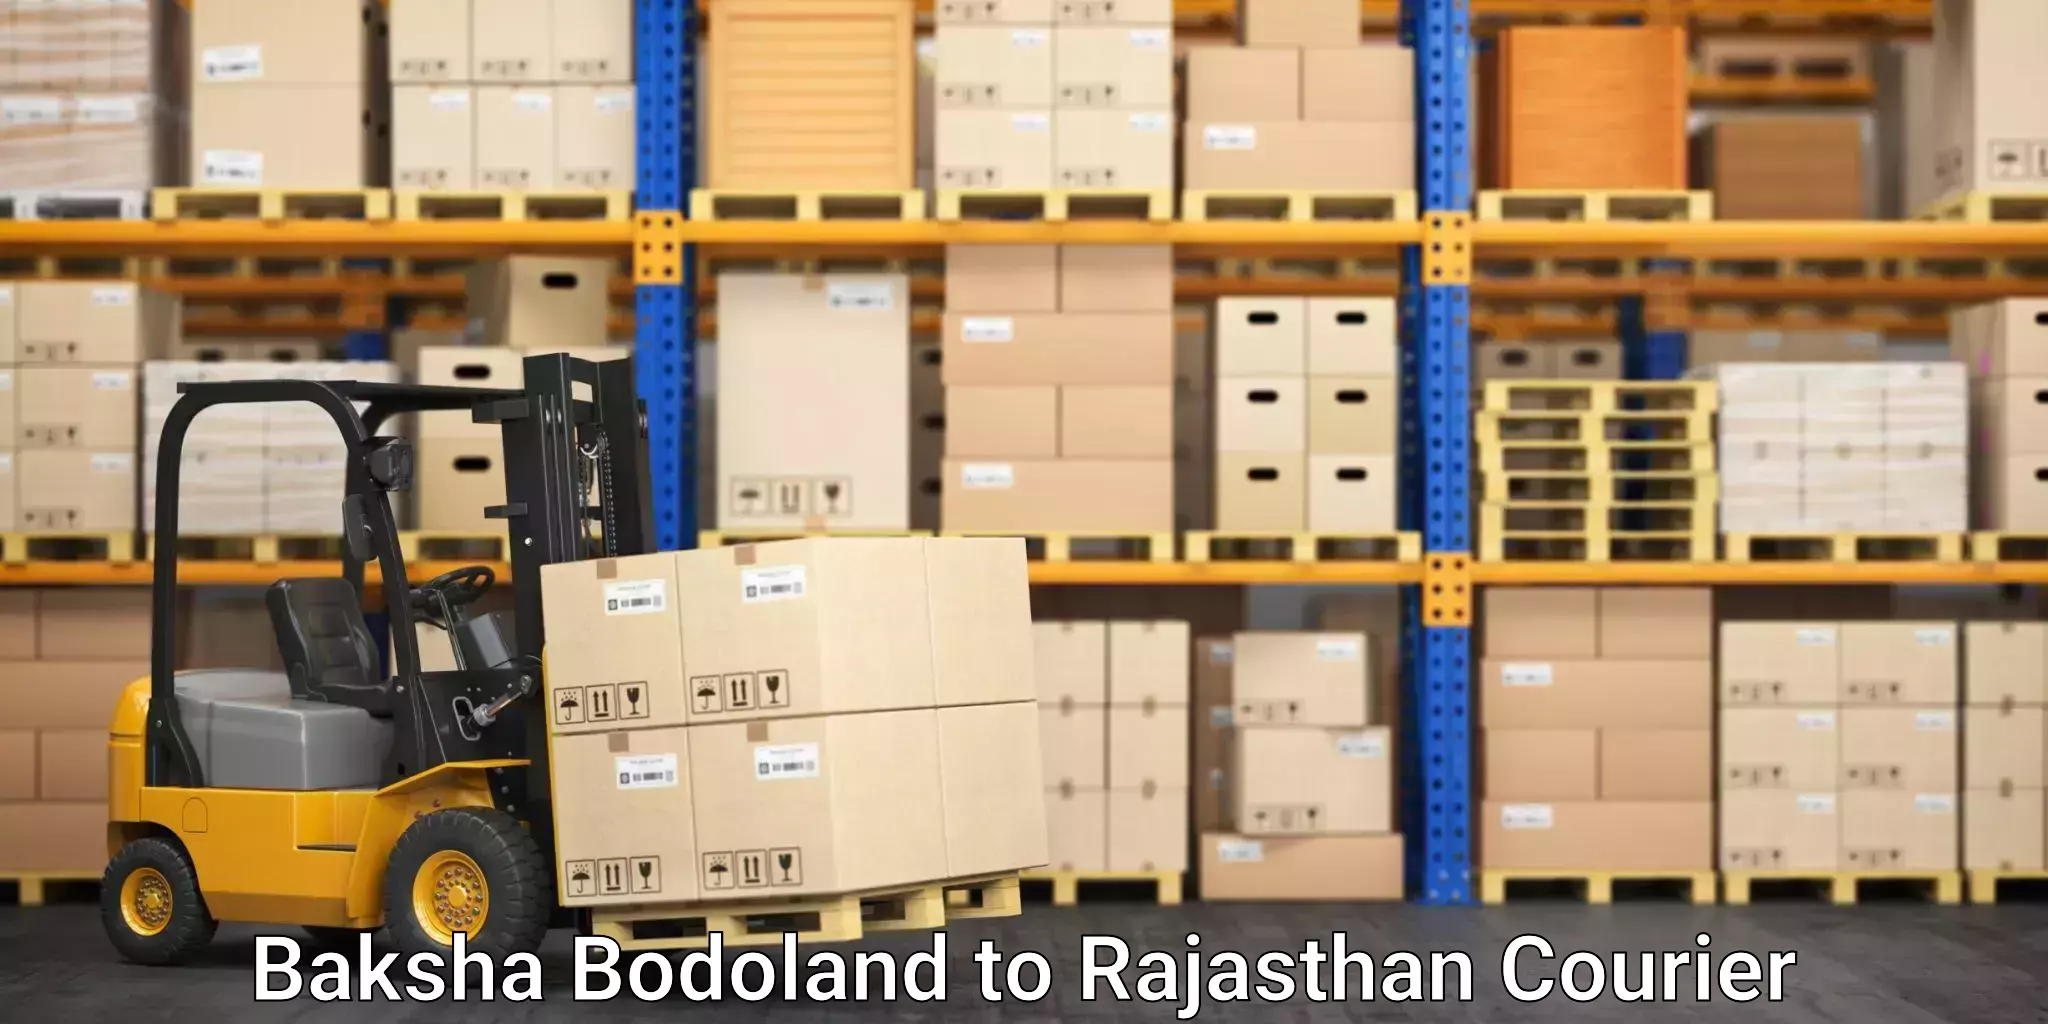 Multi-city courier Baksha Bodoland to Jaipur